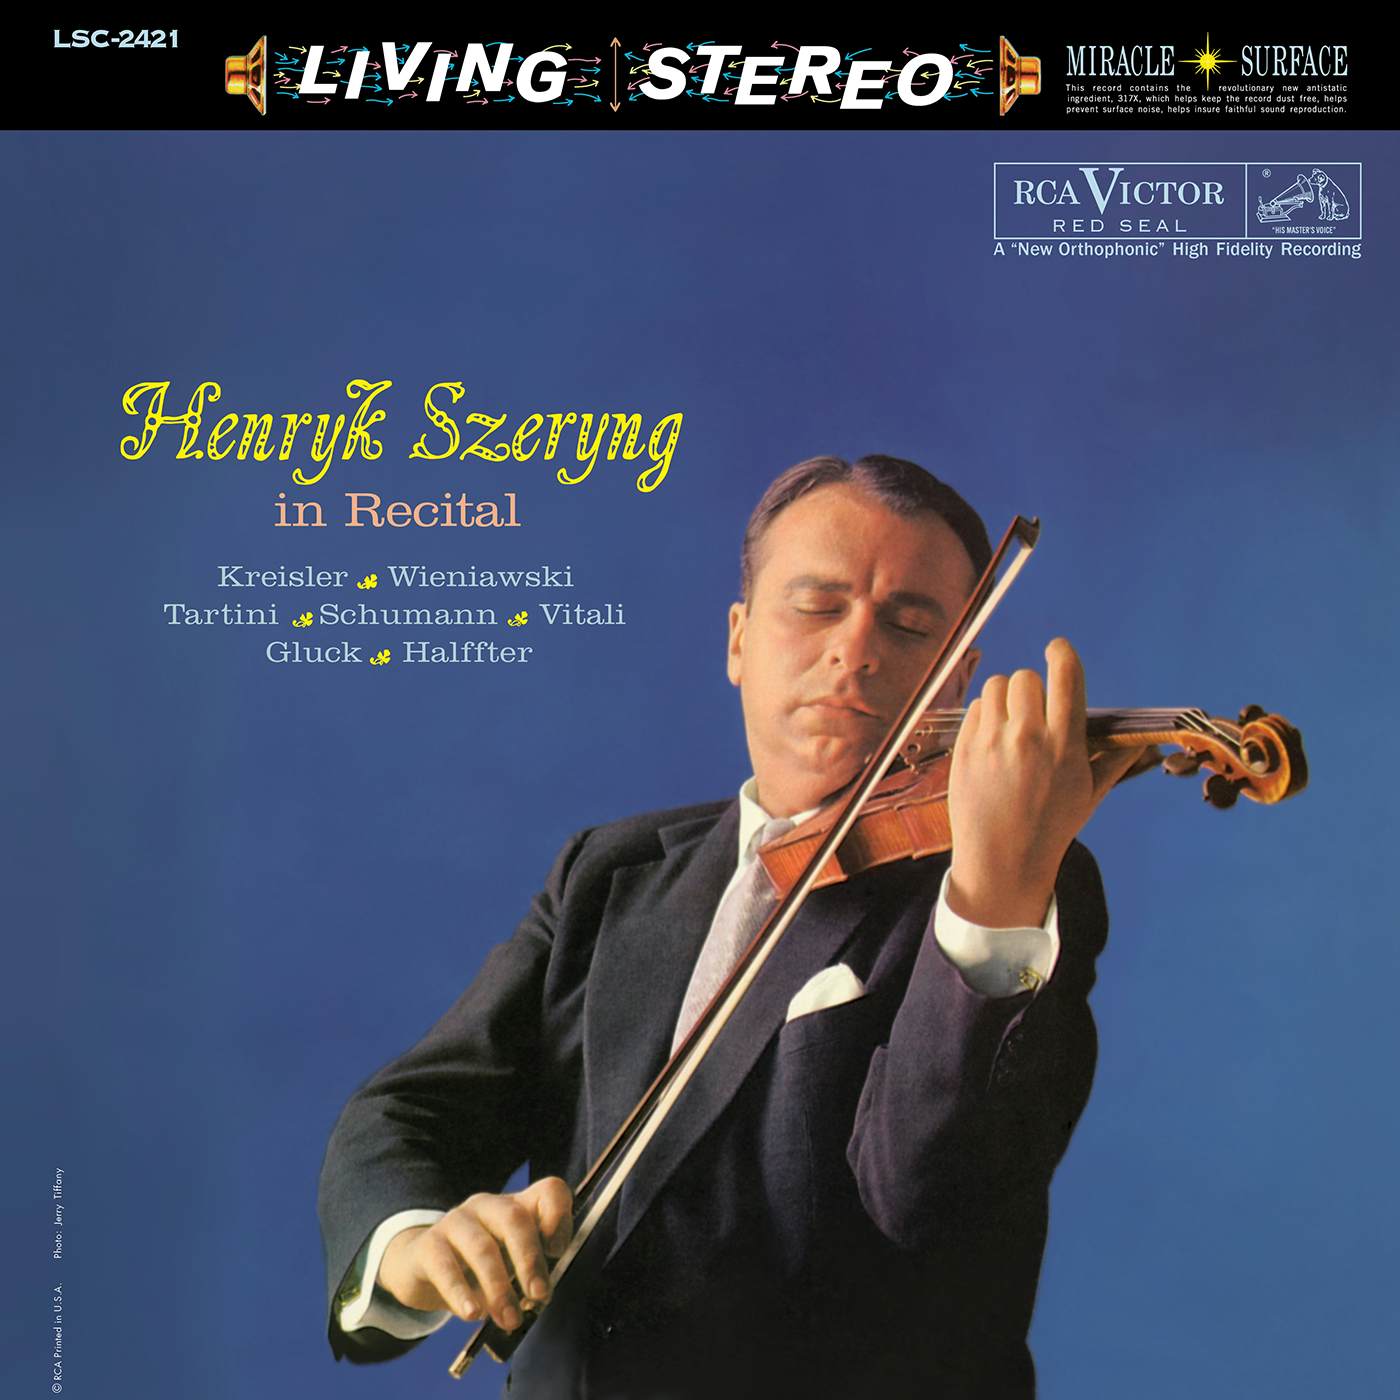 Henryk Szeryng in Recital Vinyl Record